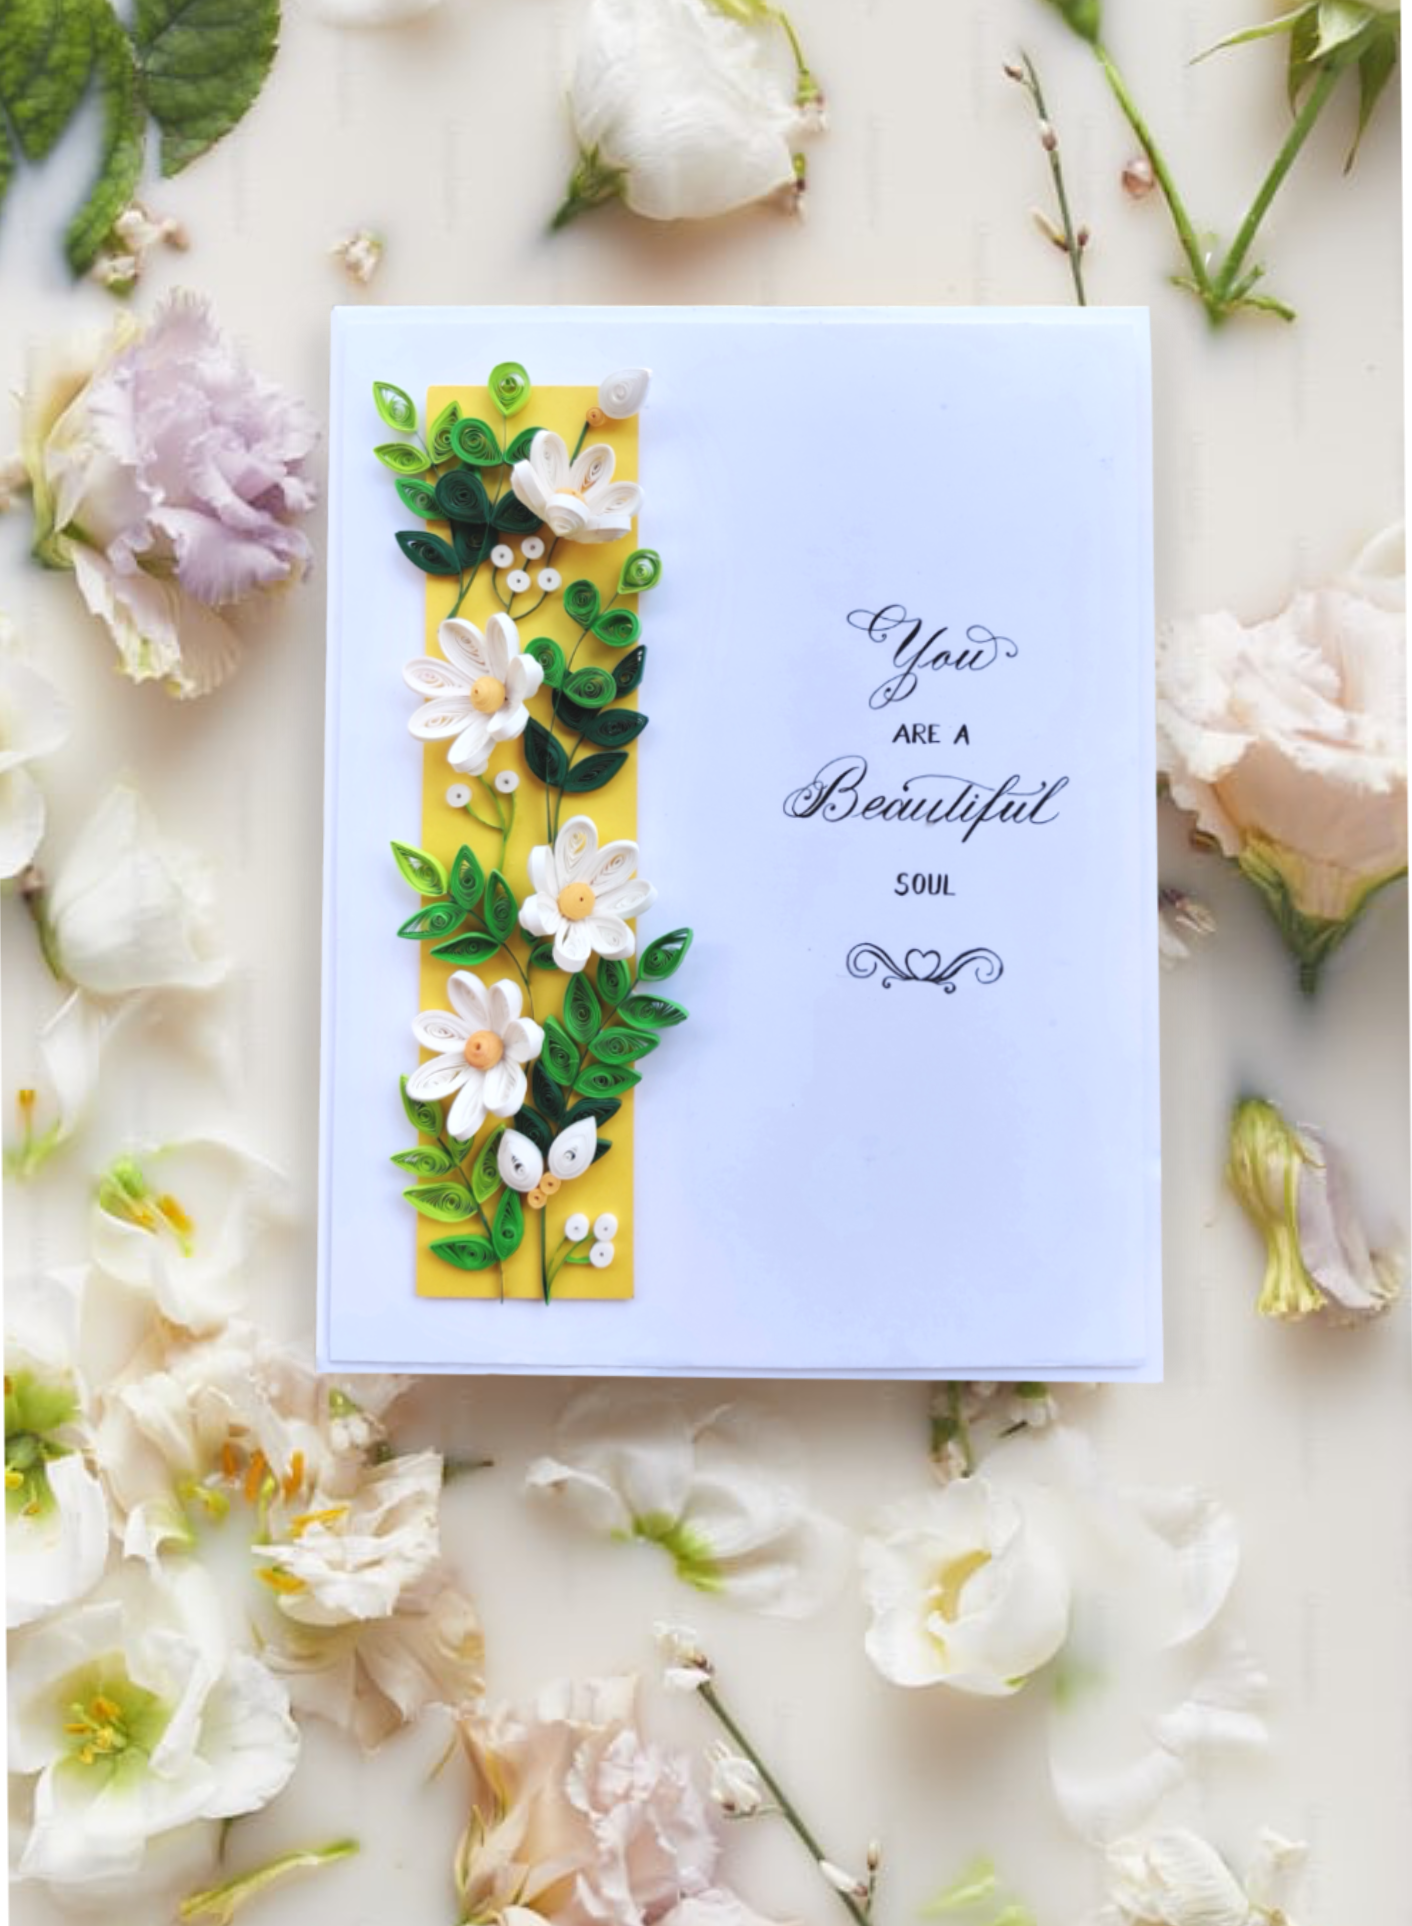 Blooming Daisies Card